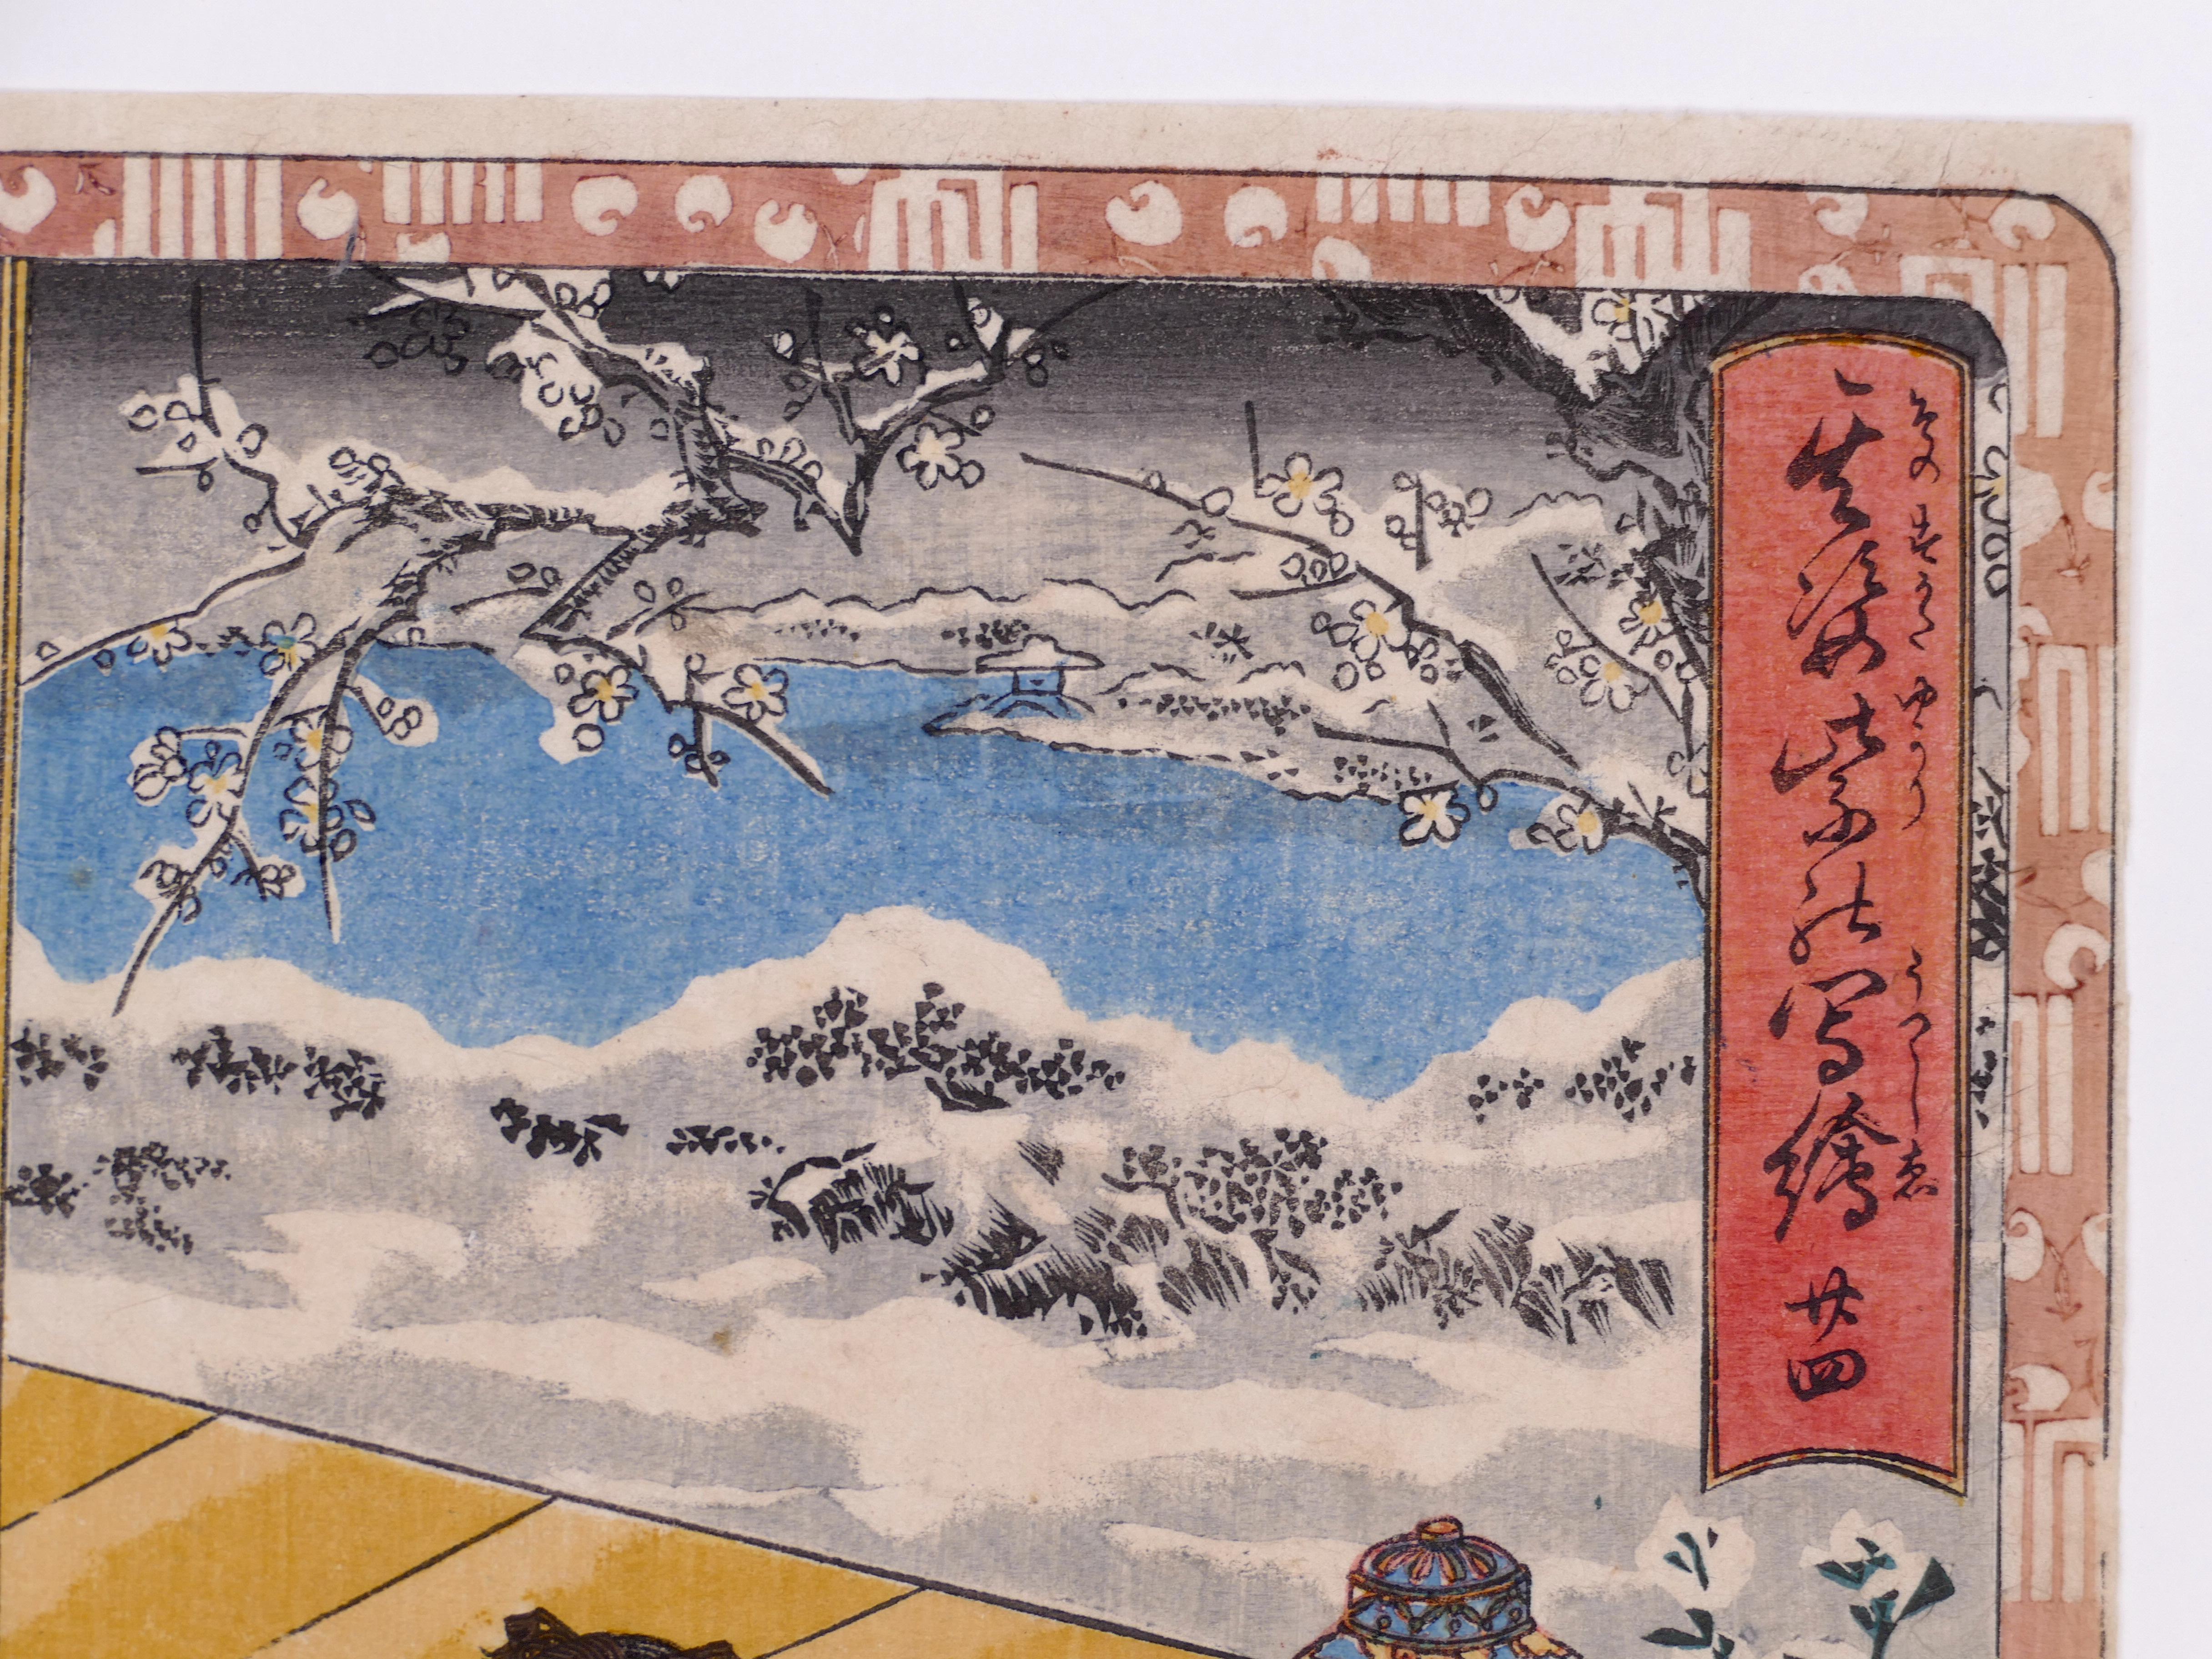 Genji Monogatari - Chapter 24: Kocho is a color woodblock print, realized in 1851 by one of the most famous Japanese Ukiyo-e artists Utagawa Kunisada, also known as Utagawa Toyokuni III (1786 - 1865) or simply Kunisada I. 

Format: yoko-ôban (27.5 x